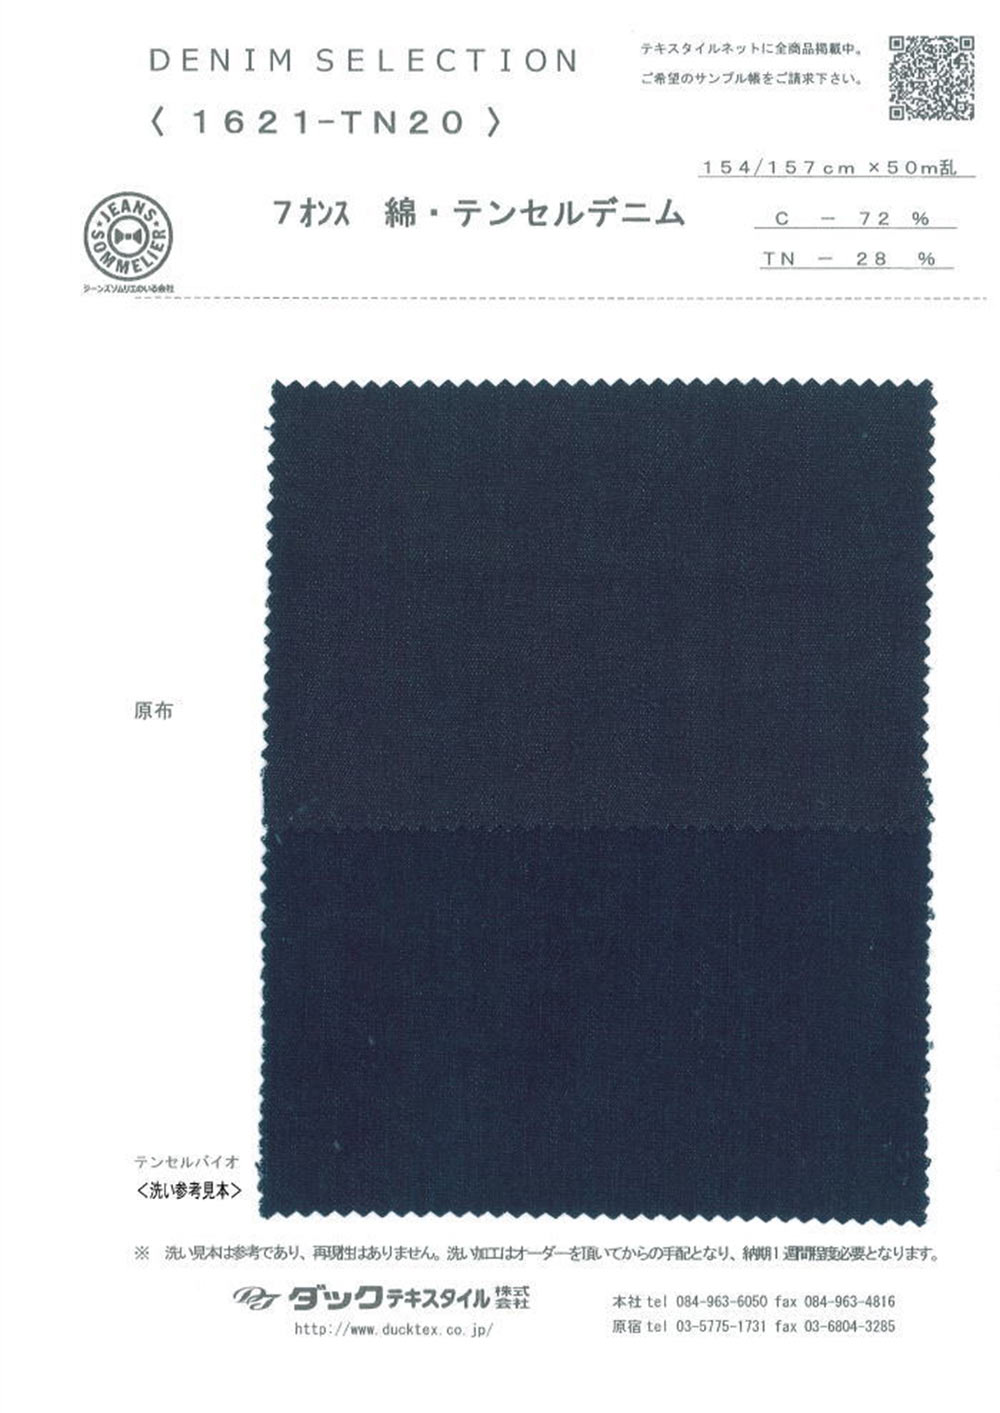 1621-TN20 [Fabrica Textil] DUCK TEXTILE